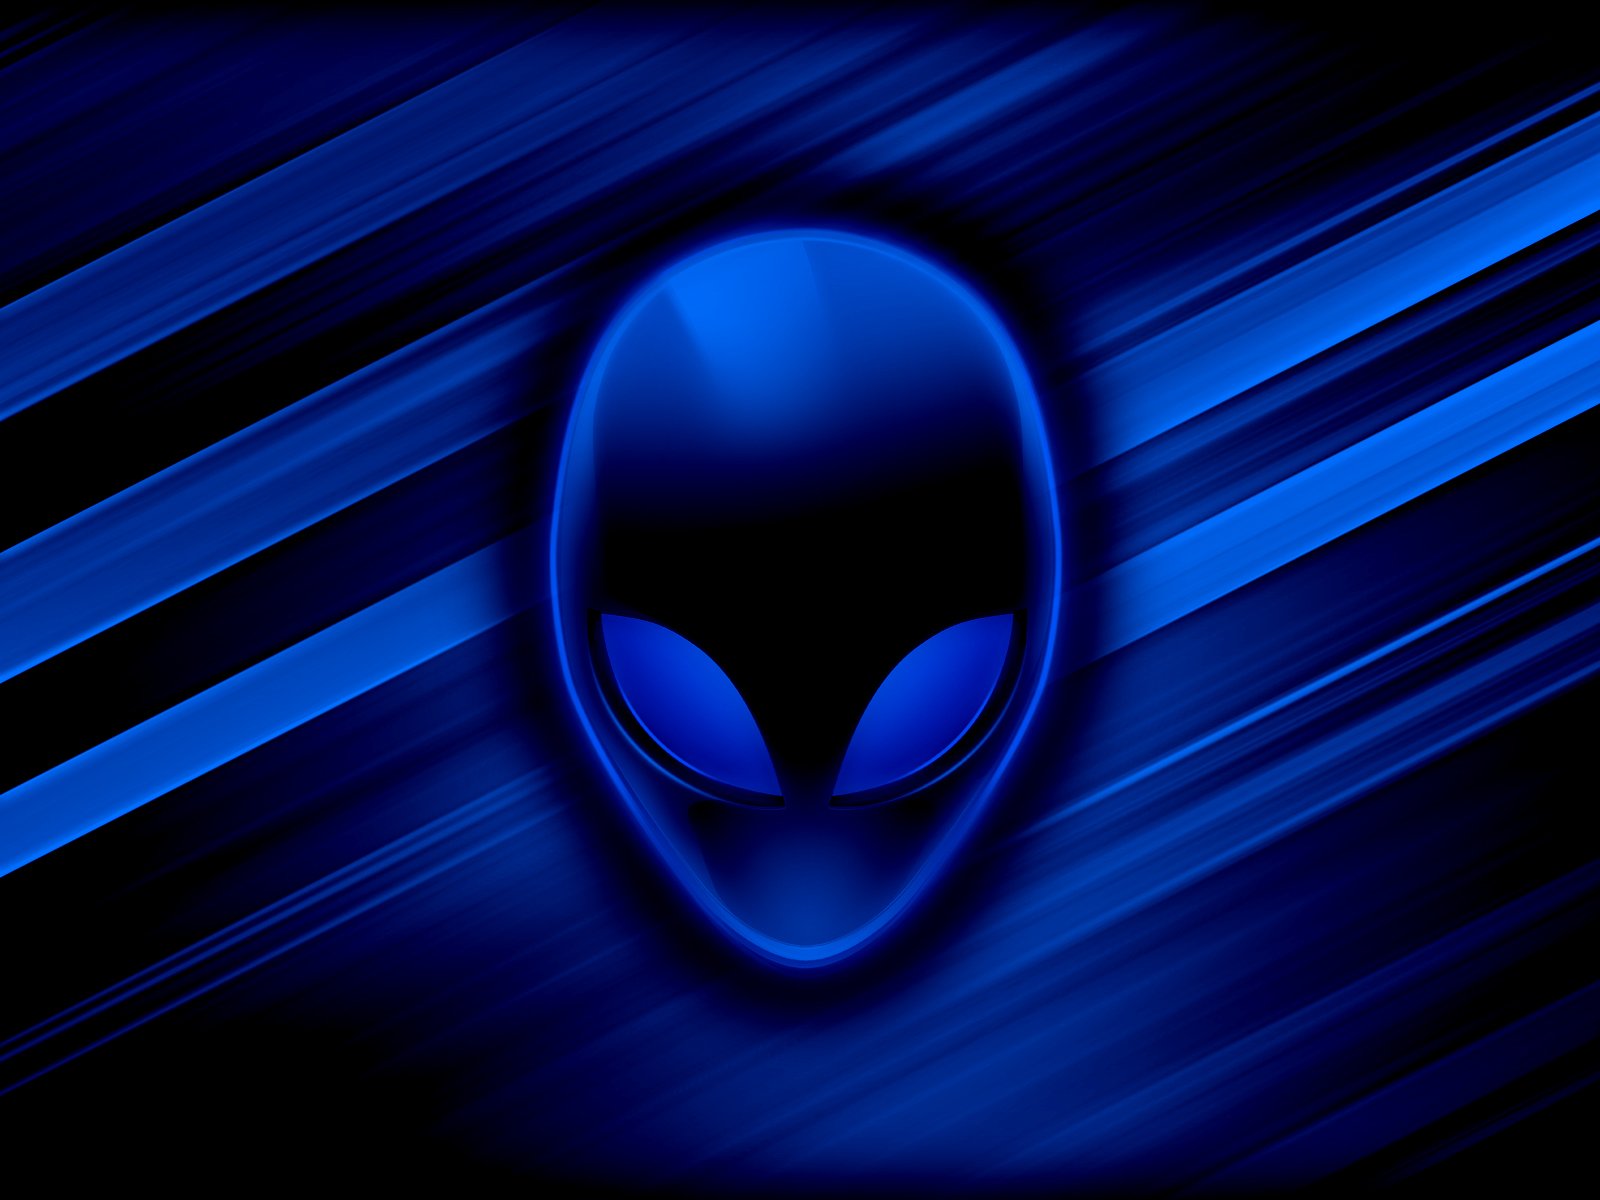 Alien Horror Sci Fi Futuristic Dark Aliens Creature Survival Alienware Wallpapers Hd Desktop And Mobile Backgrounds